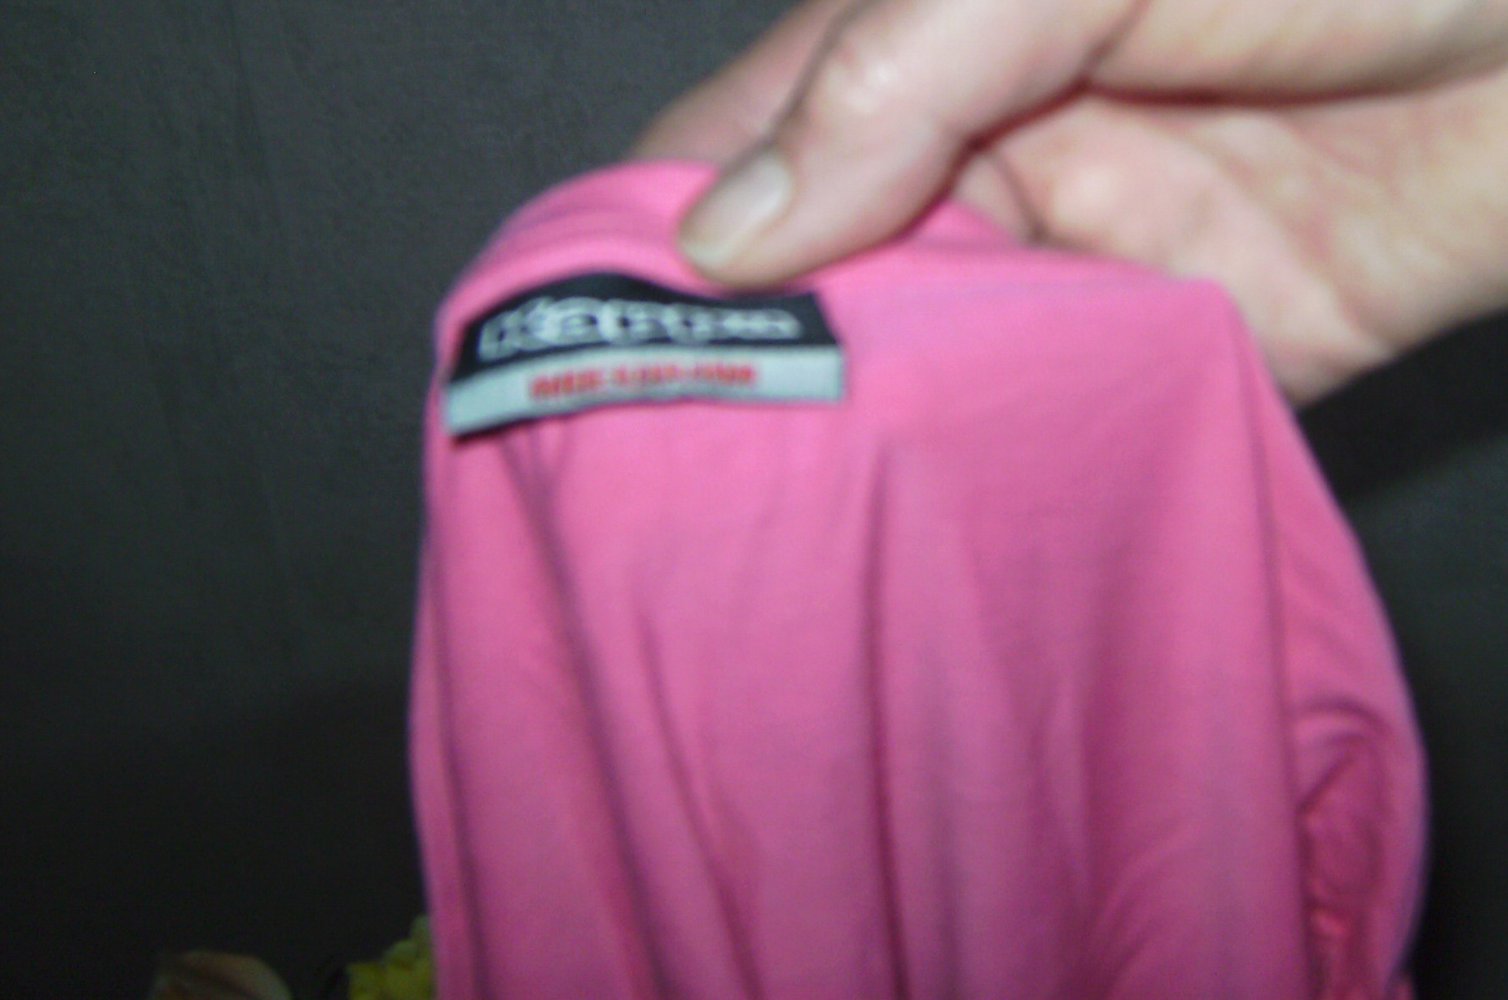 T-shirt, Sportshirt Gr. M, Kappa pink Kurzarm Outdoor Laufshirt Sportiv medium 